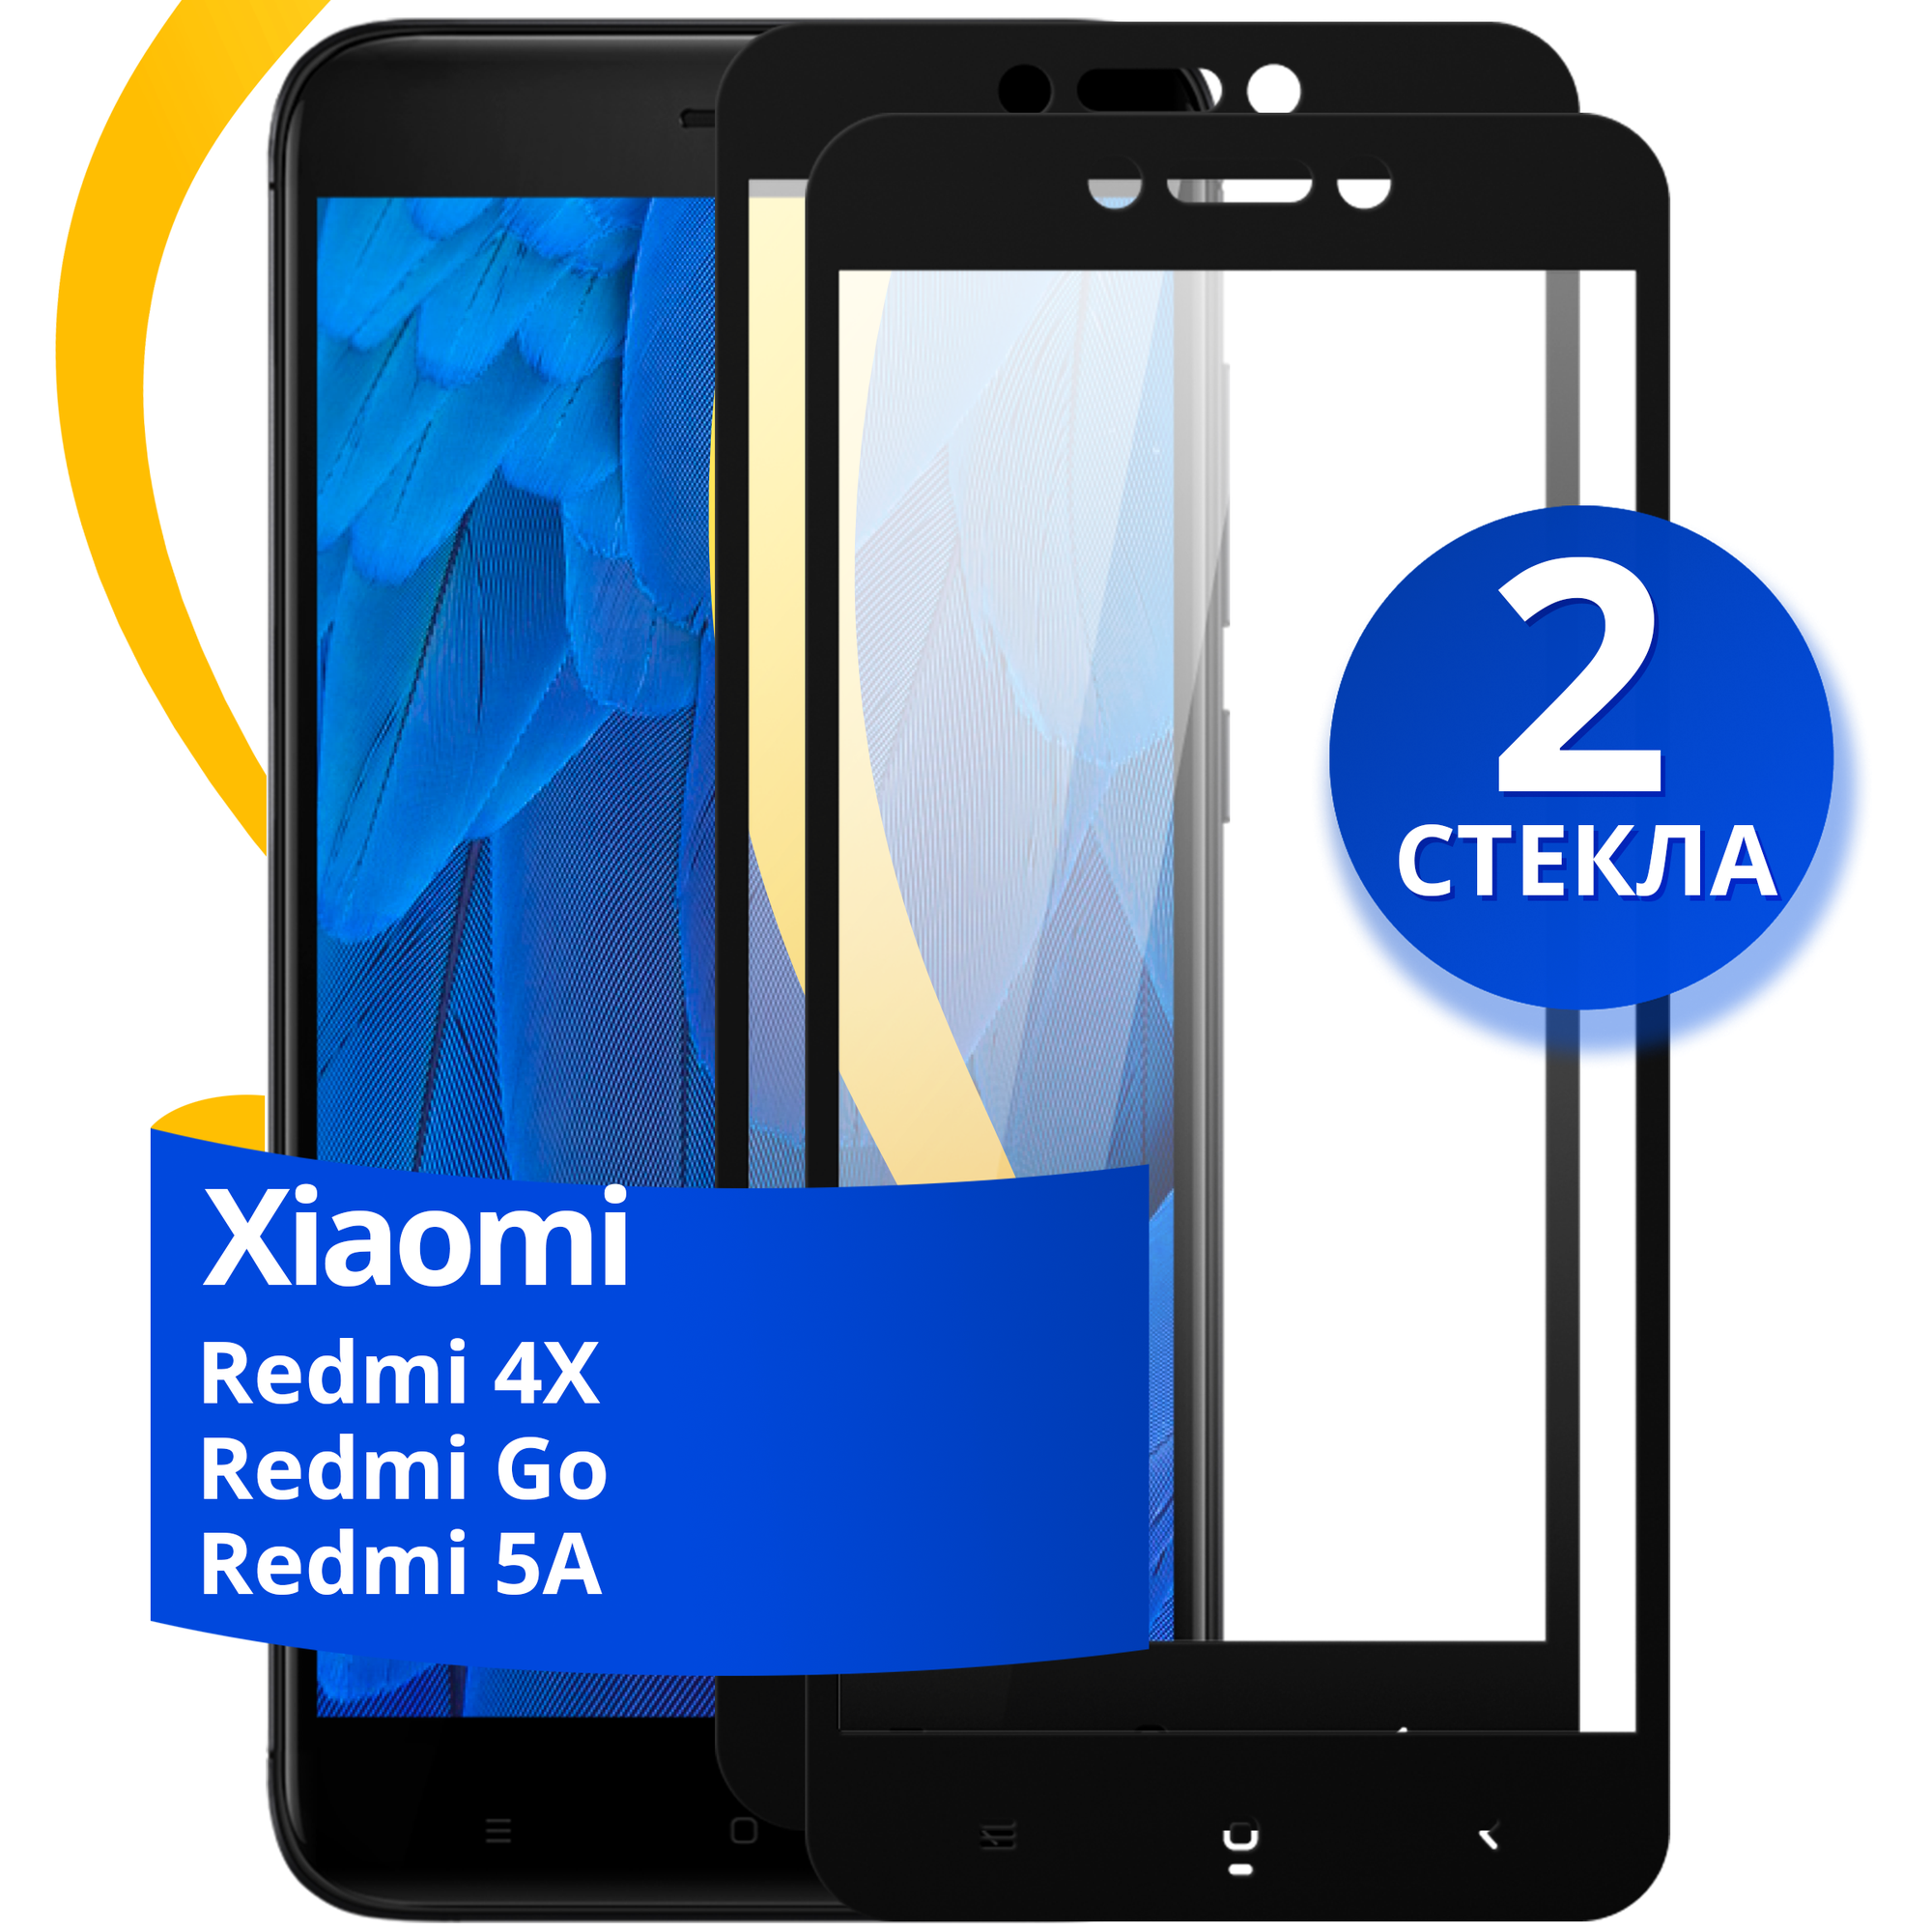 Комплект из 2 шт. Глянцевое защитное стекло для телефона Xiaomi Redmi 4X, Redmi Go и Redmi 5A / Противоударное на Сяоми Редми 4Х, Редми Го и Редми 5А